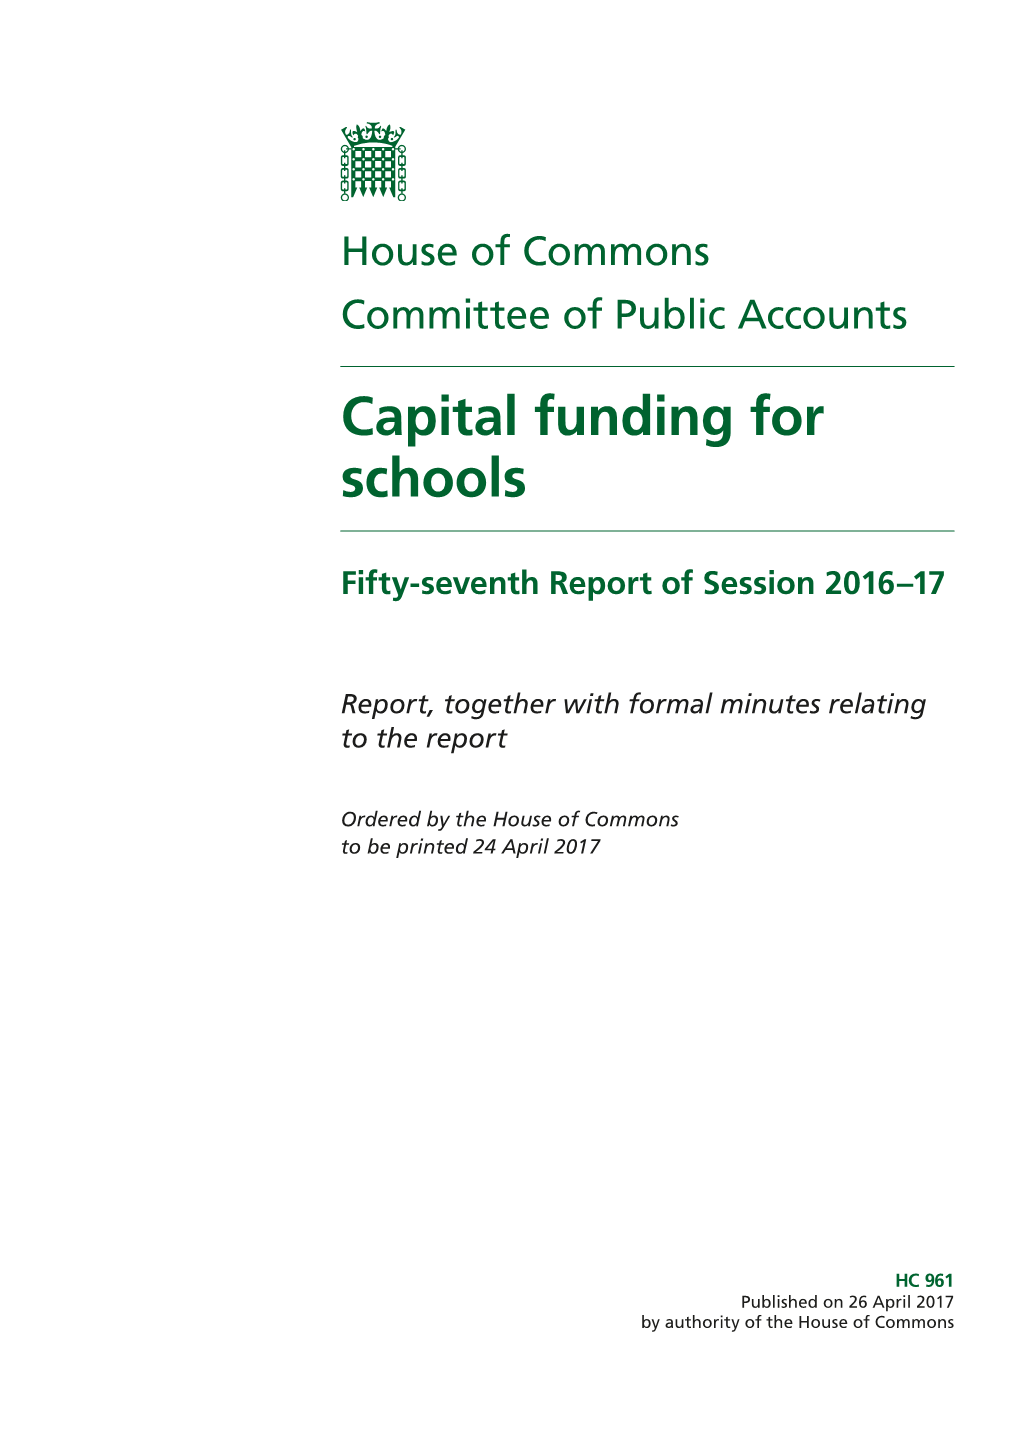 Capital Funding for Schools